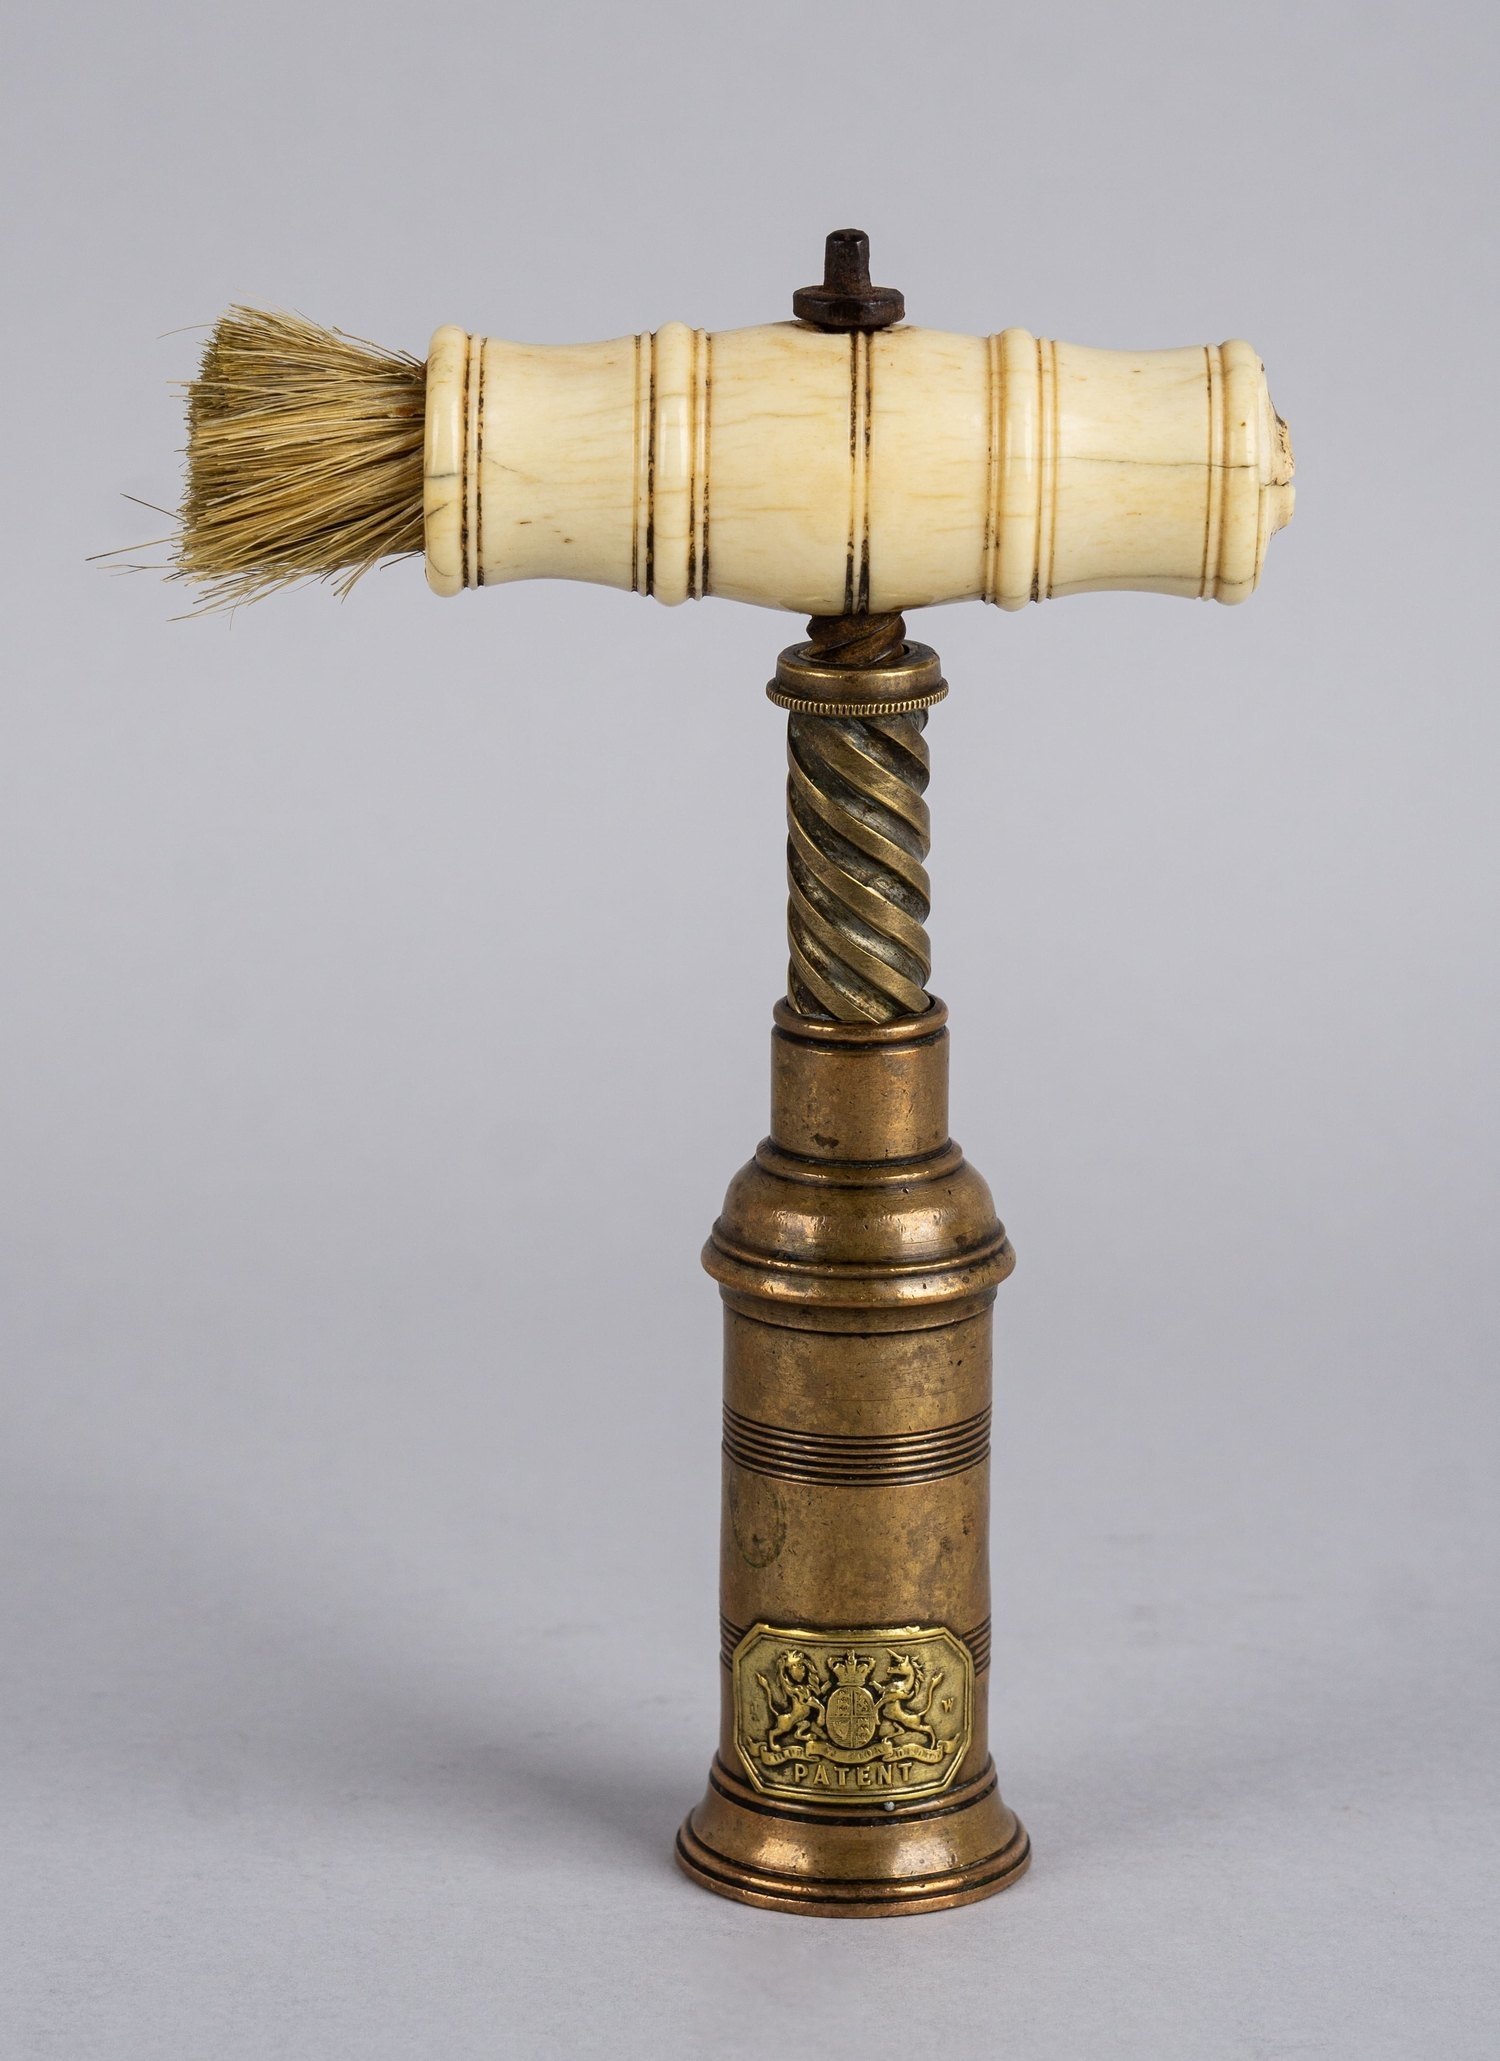 Антикварный штопор модели Thomason, 1810-1900 гг.